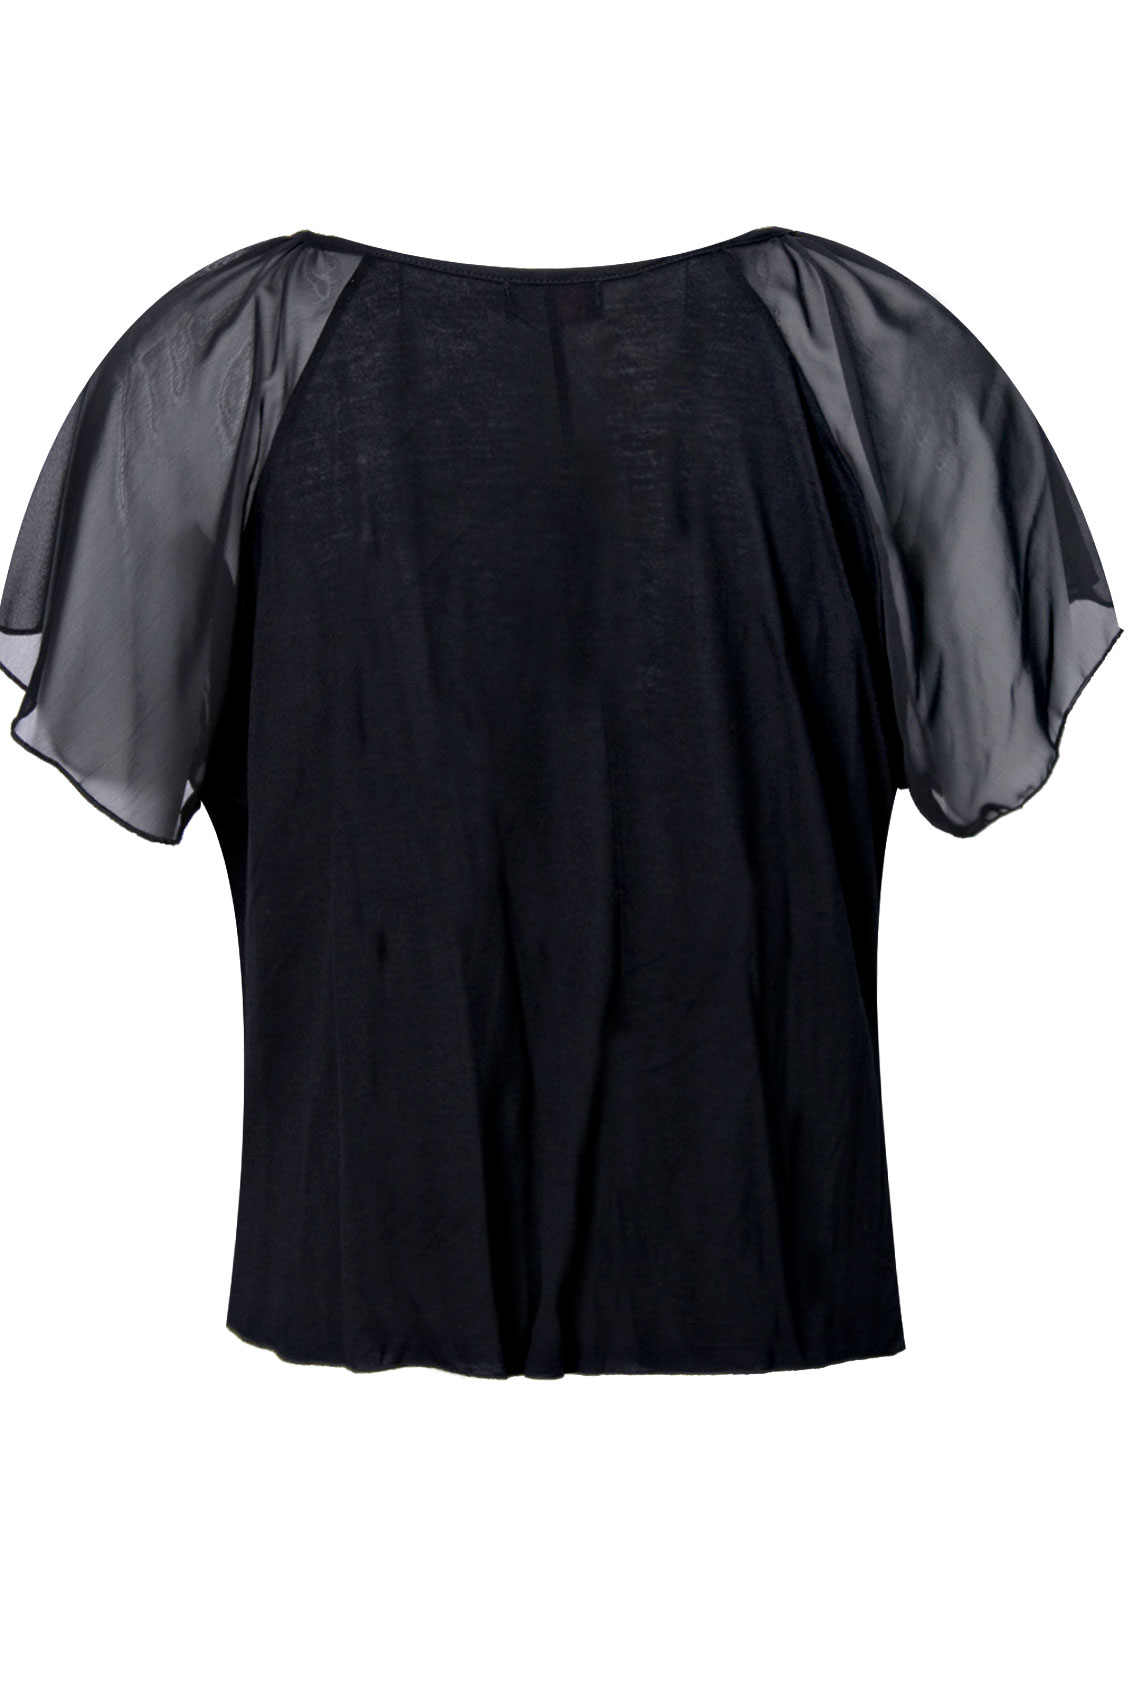 Black Jersey Shrug With Short Chiffon Sleeves plus size 14,16,18,20,22 ...